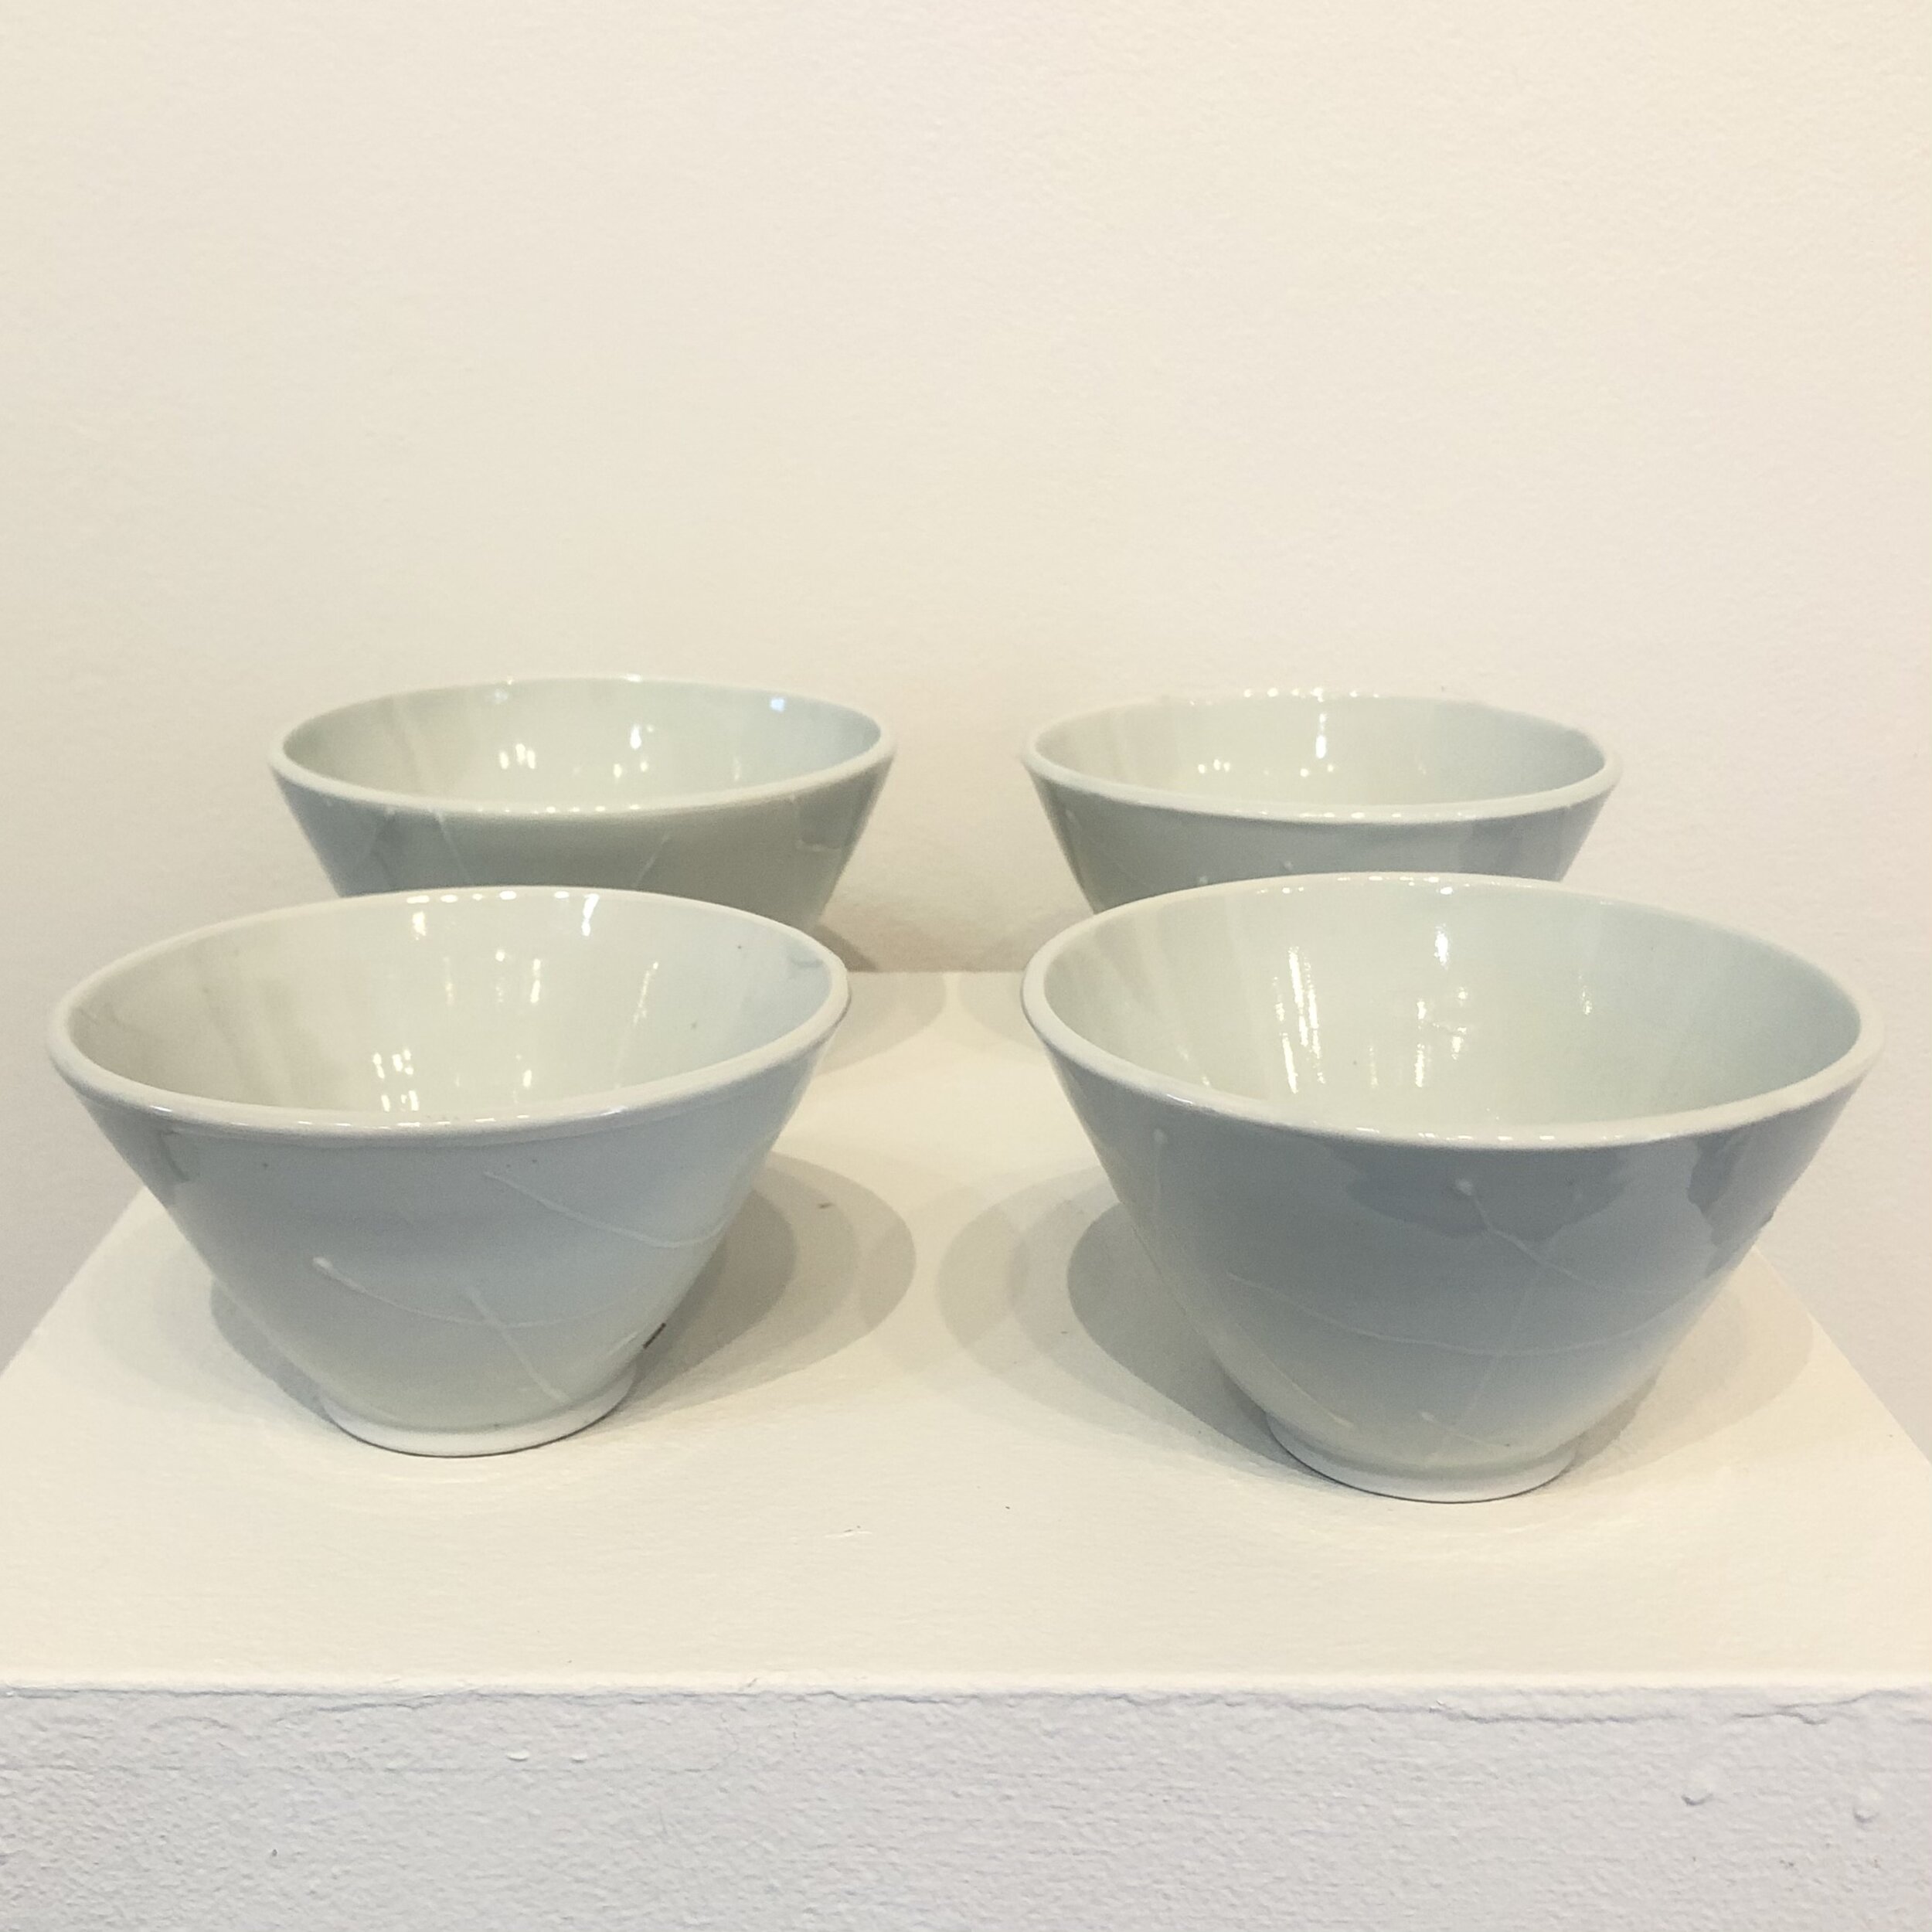  Porcelain bowls 3” high x 4 3/4”diameter SOLD 